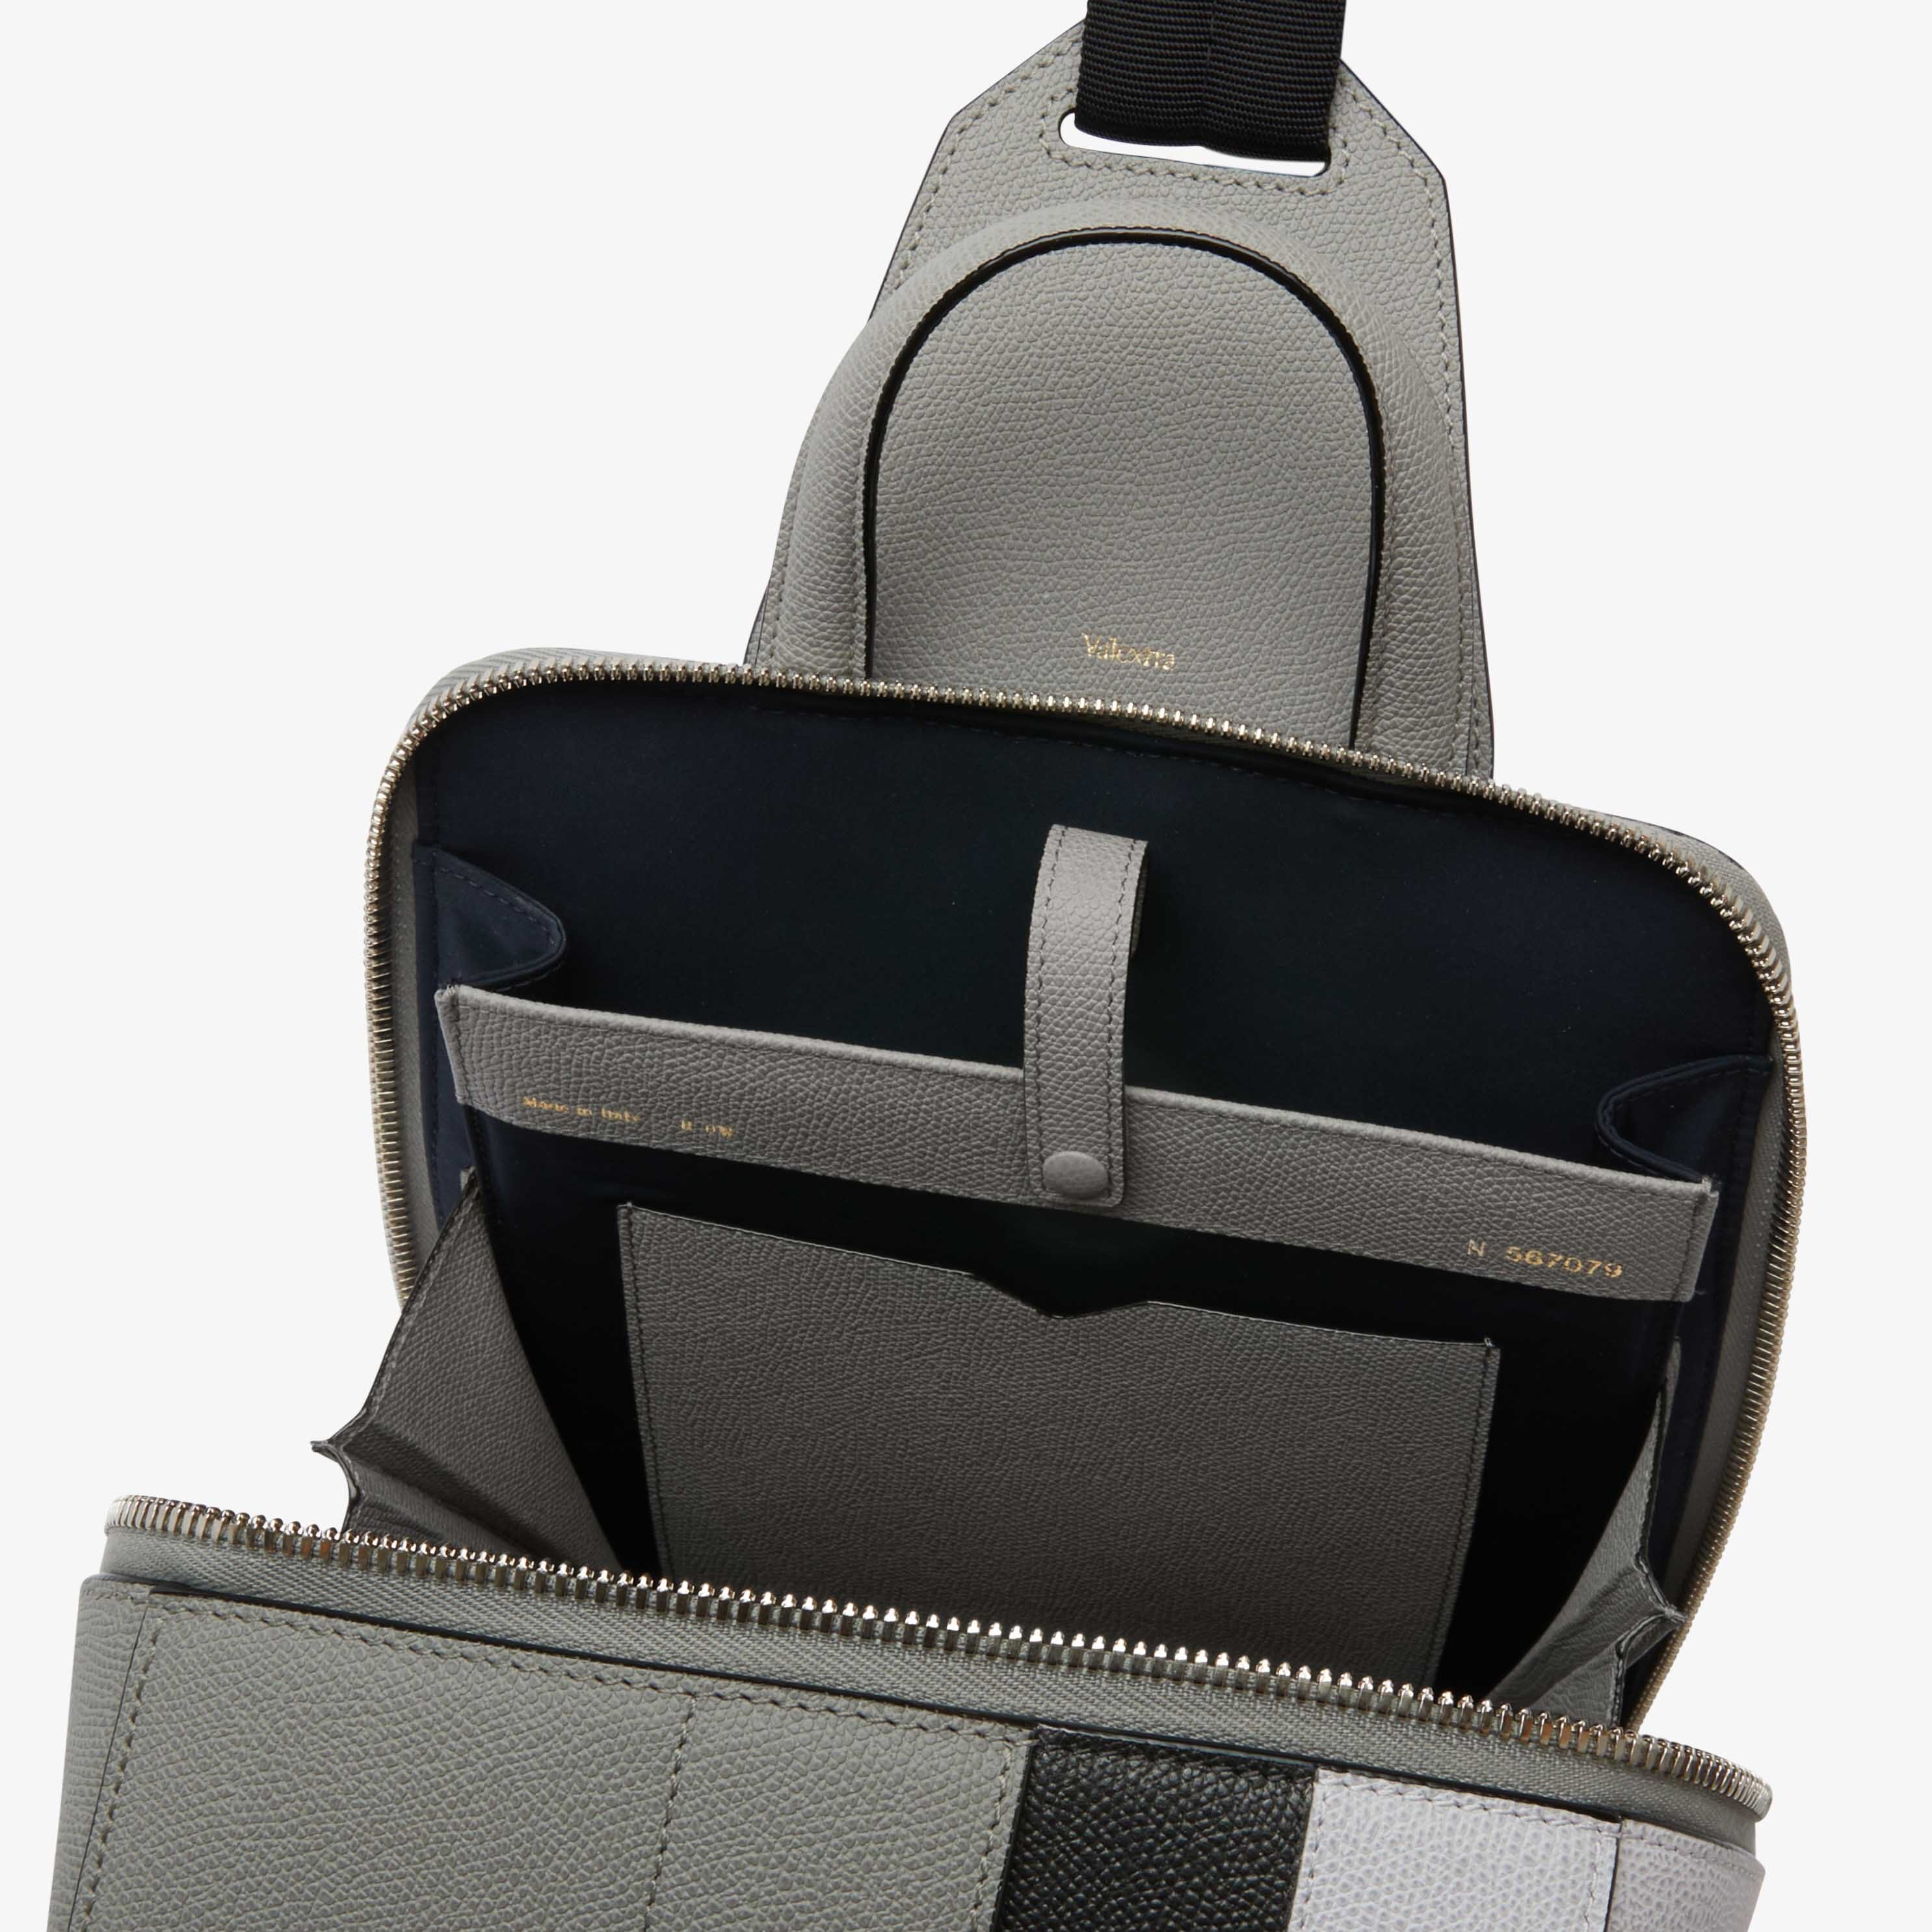 V-line Intarsia One Shoulder Backpack - Cement Grey/Black/Stone Gery - Intarsio V New Zaino - Valextra - 2